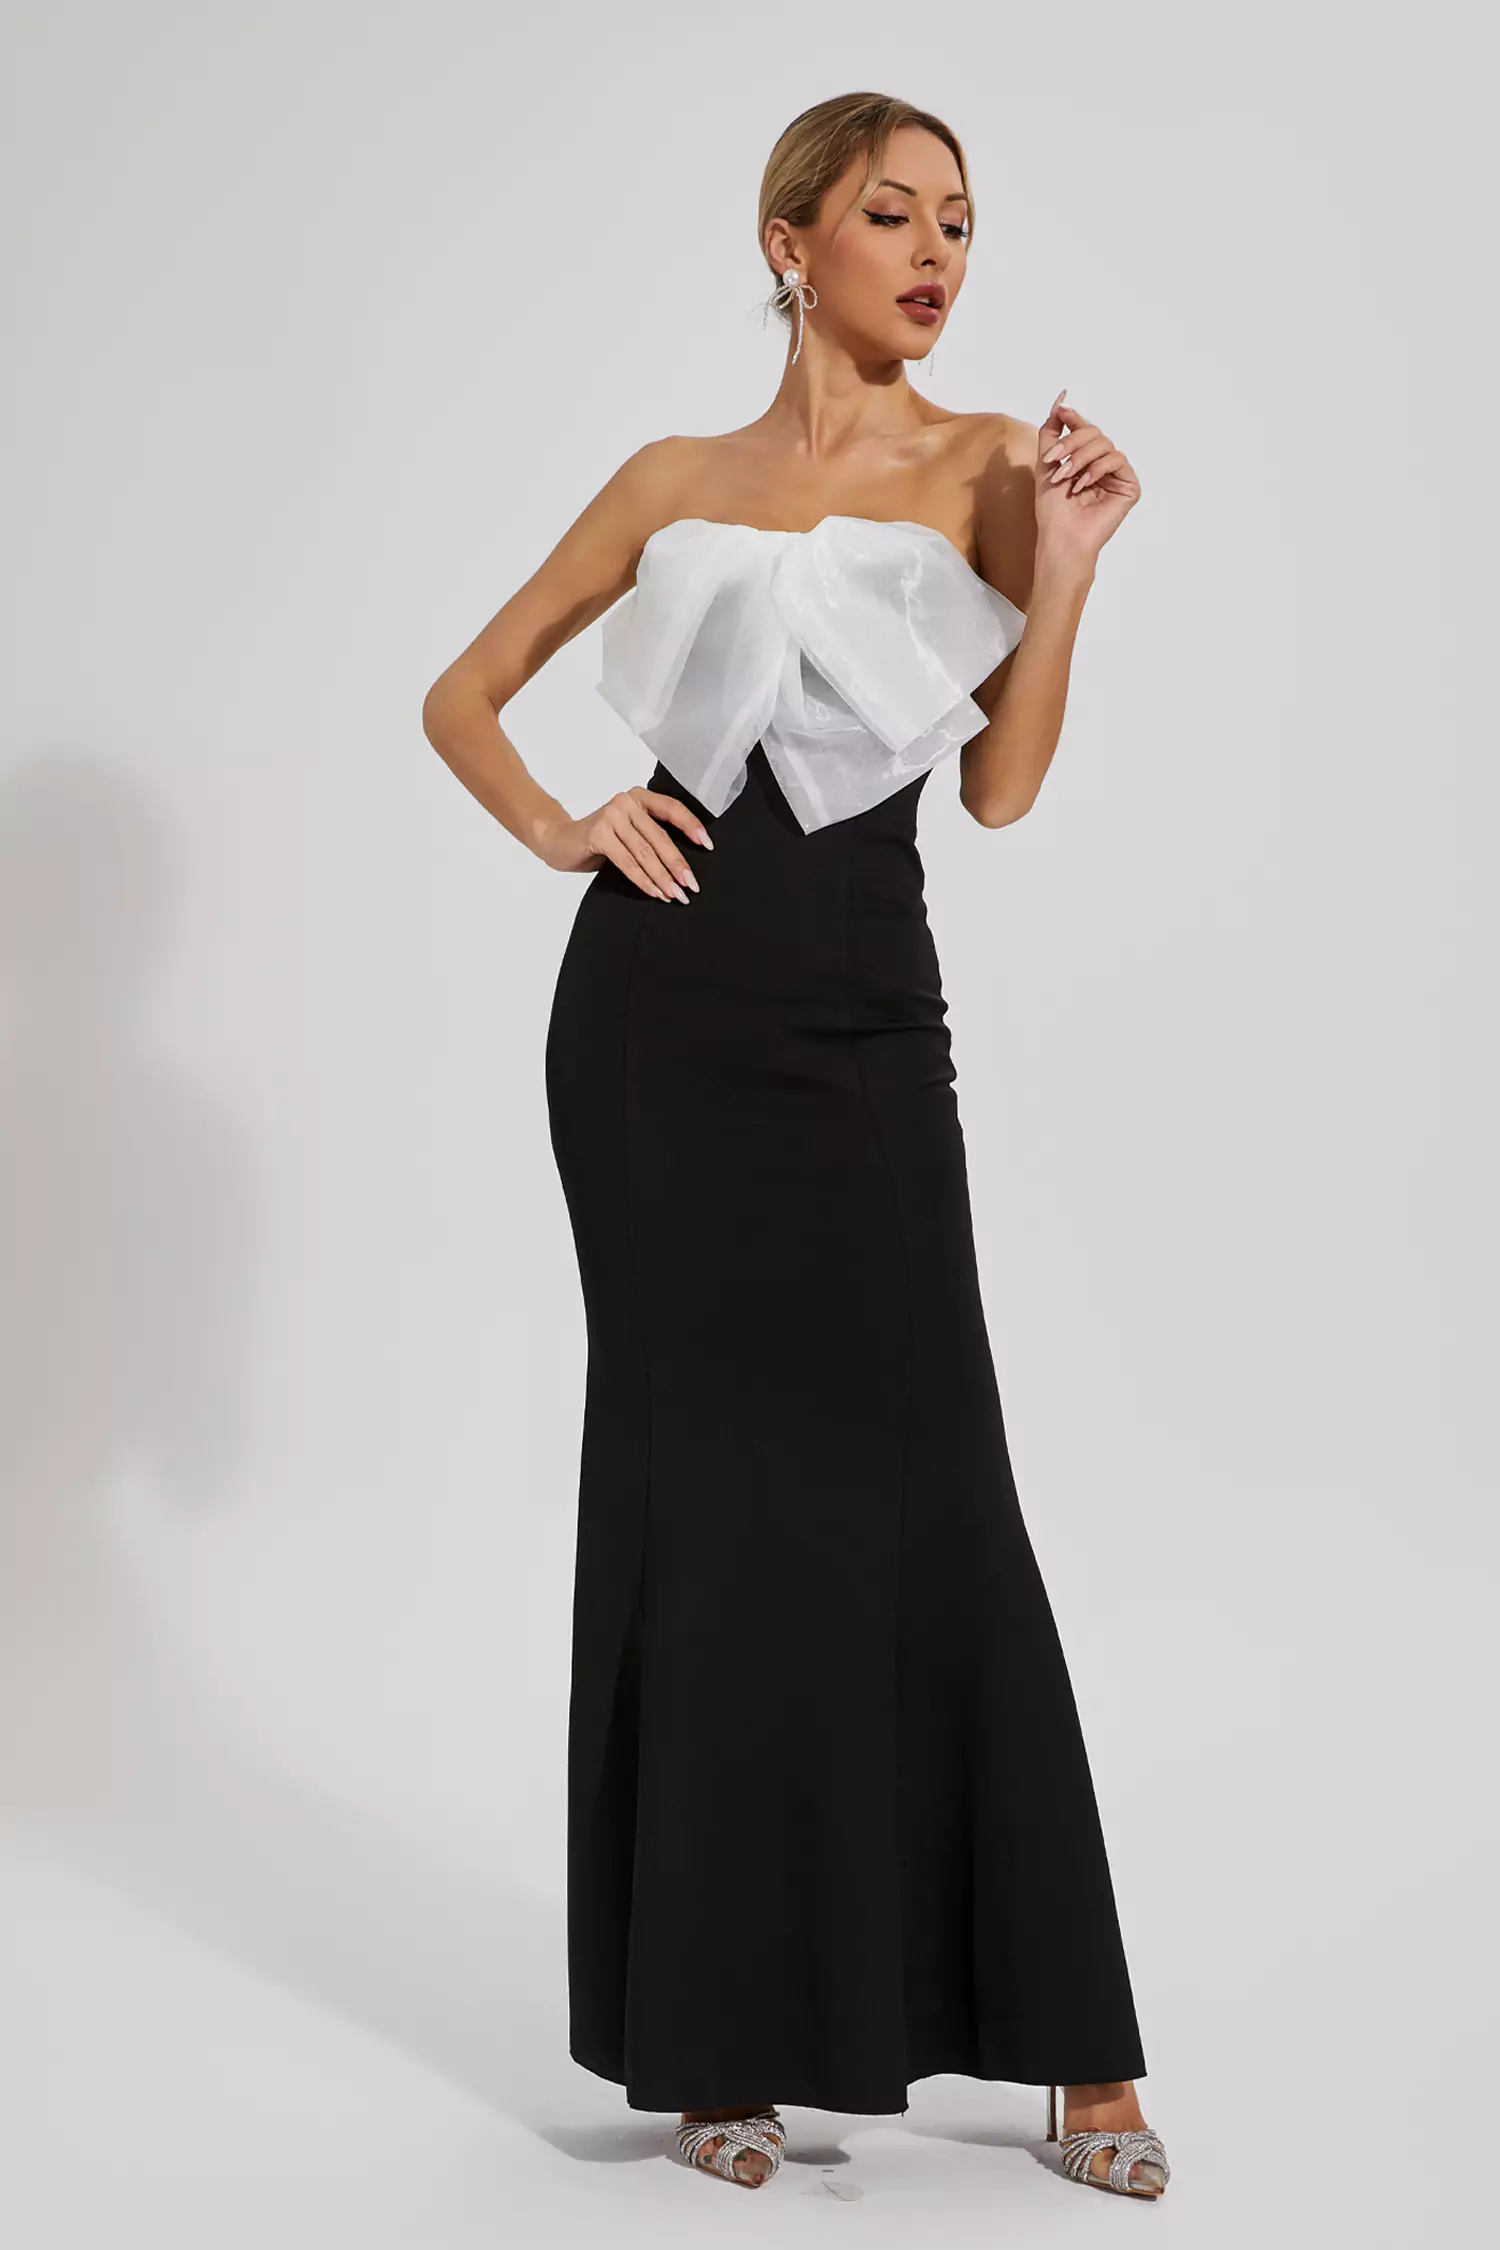 Paisleigh Black White-bow Mermaid Dress